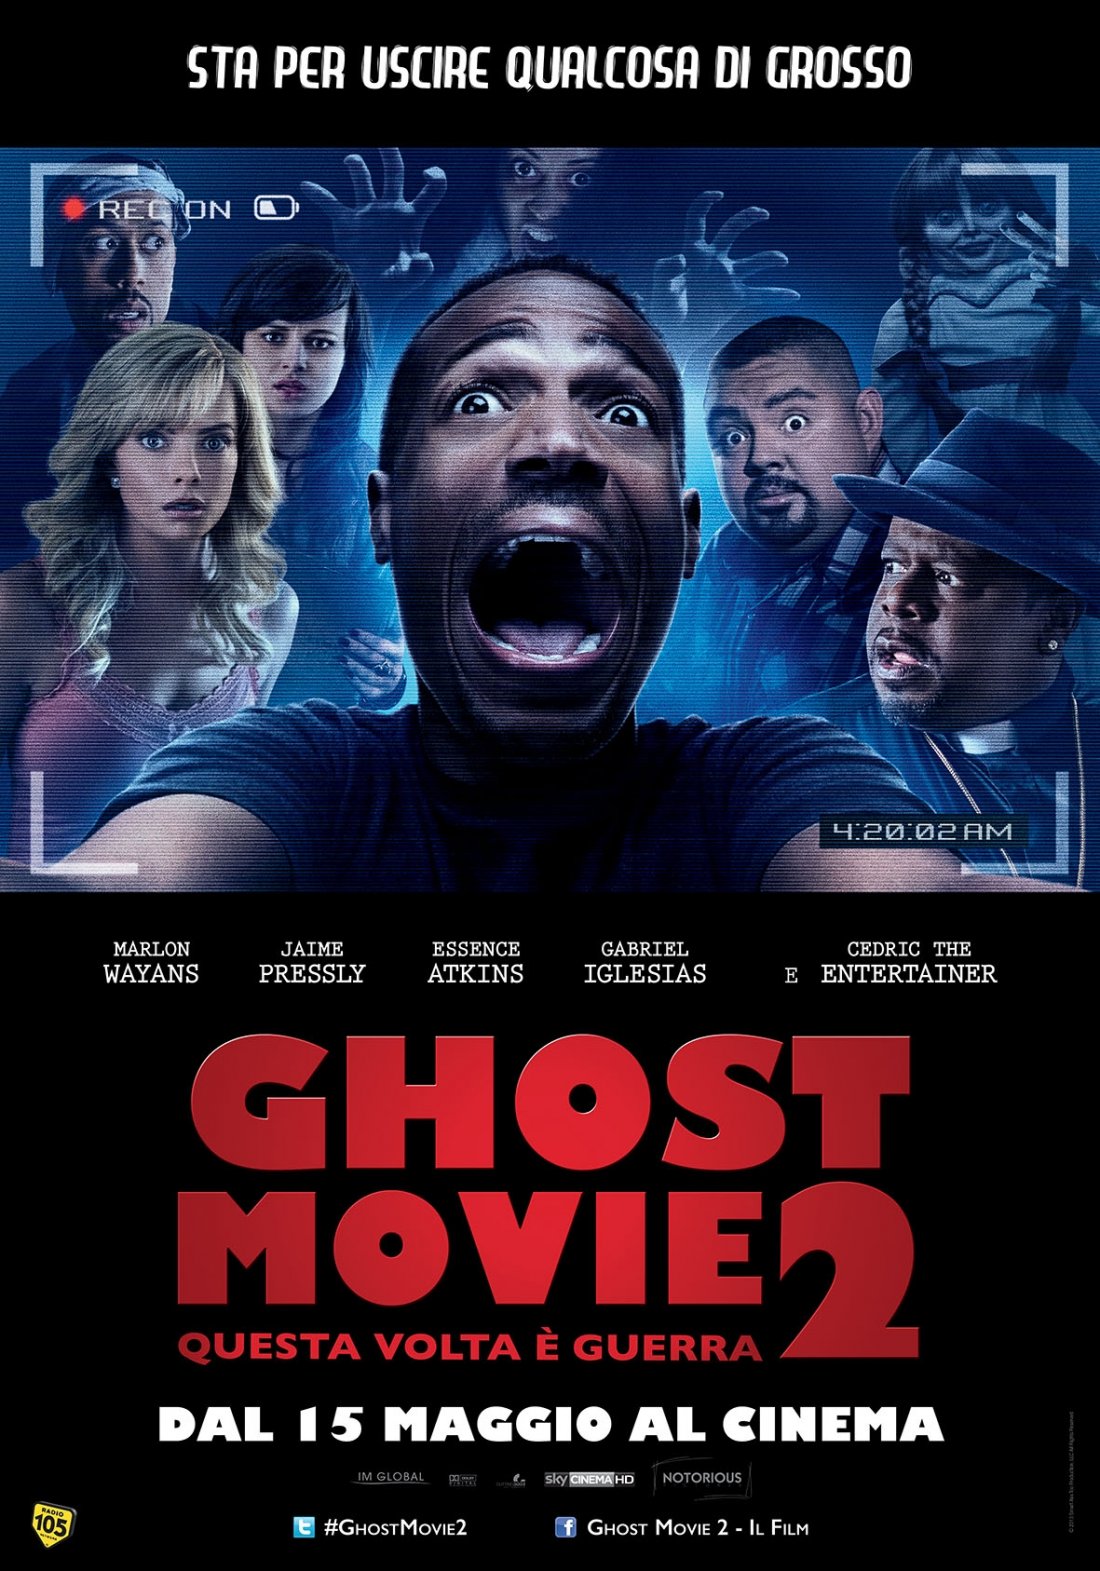 Ghost Movie 2 La Locandina Italiana 366372